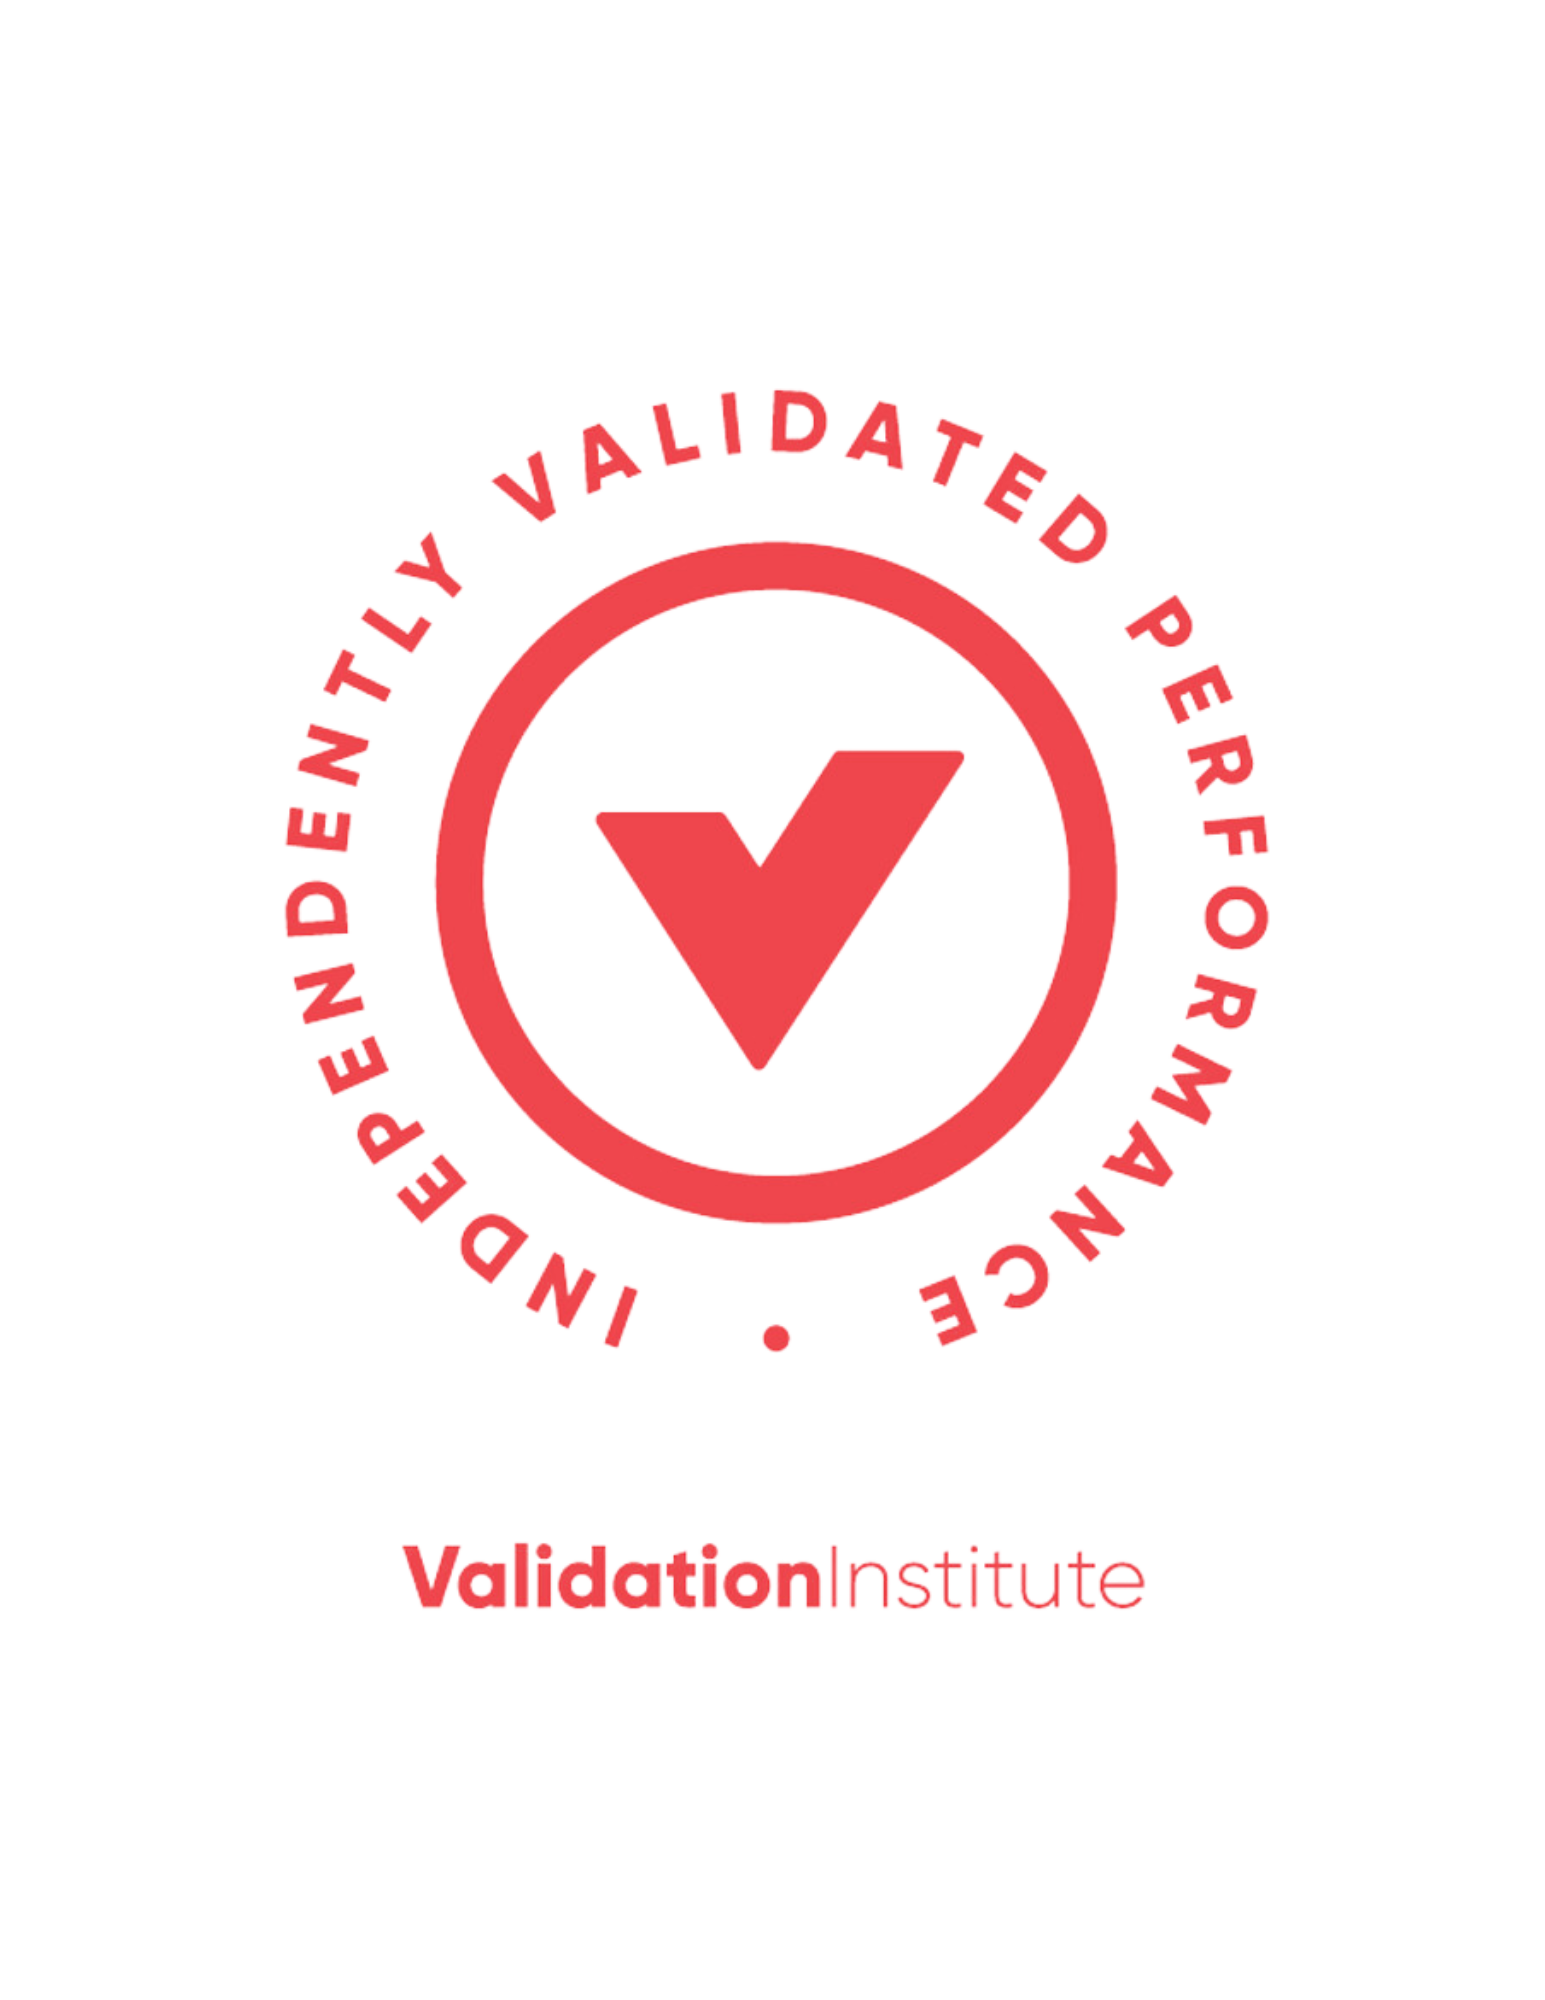 Validation Seal